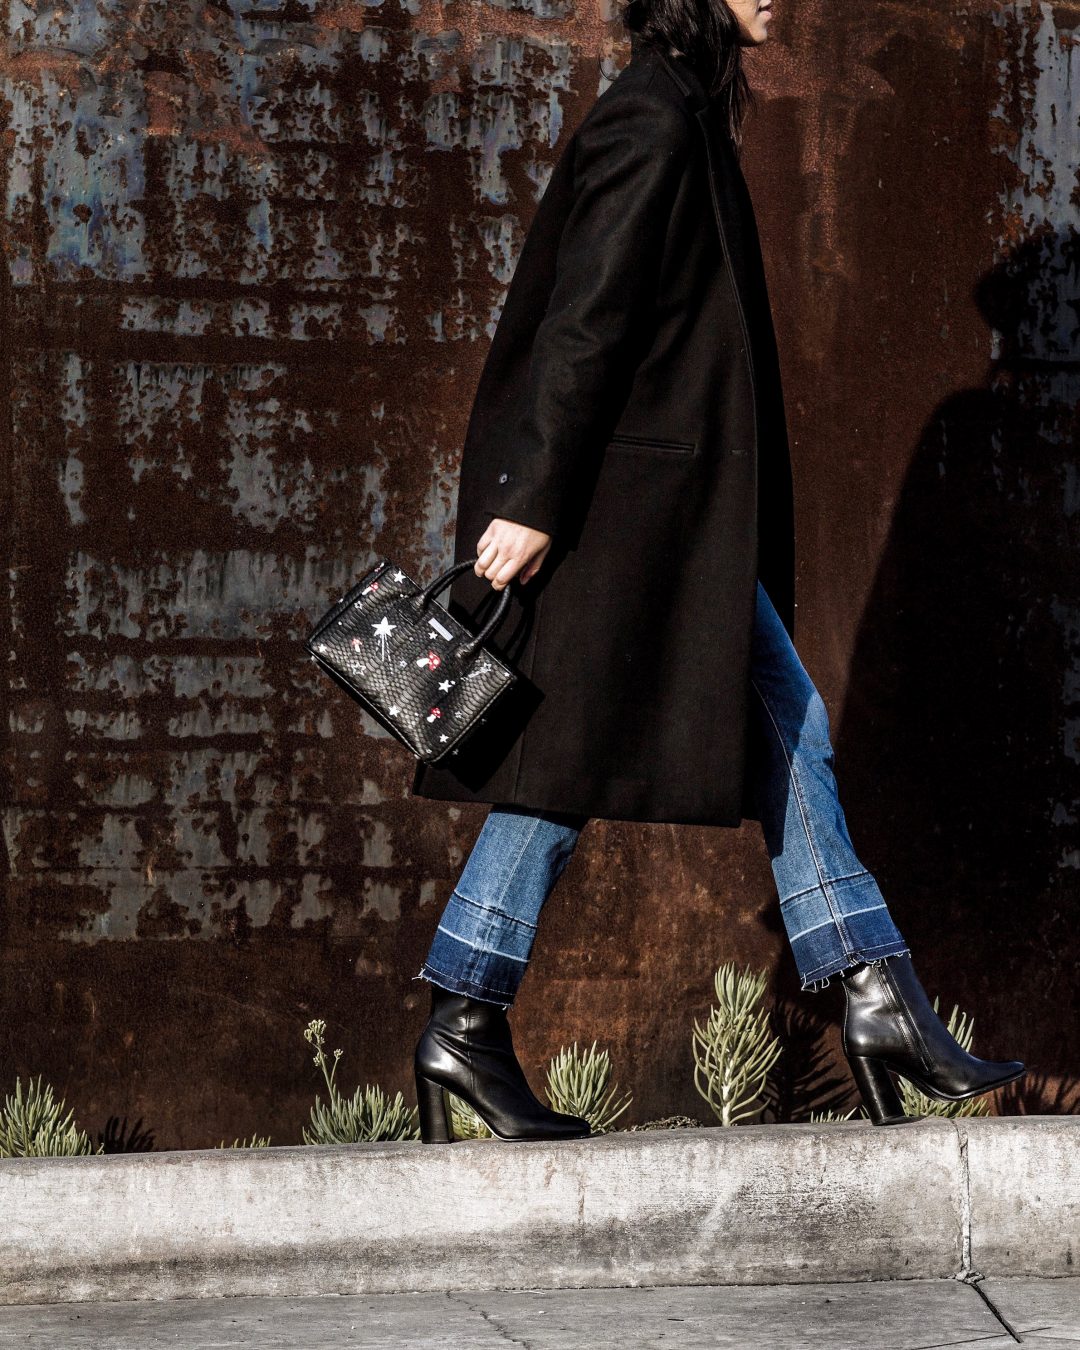 LA Blogger Tania Sarin in dear frances boots and elisabeth weinstock bag